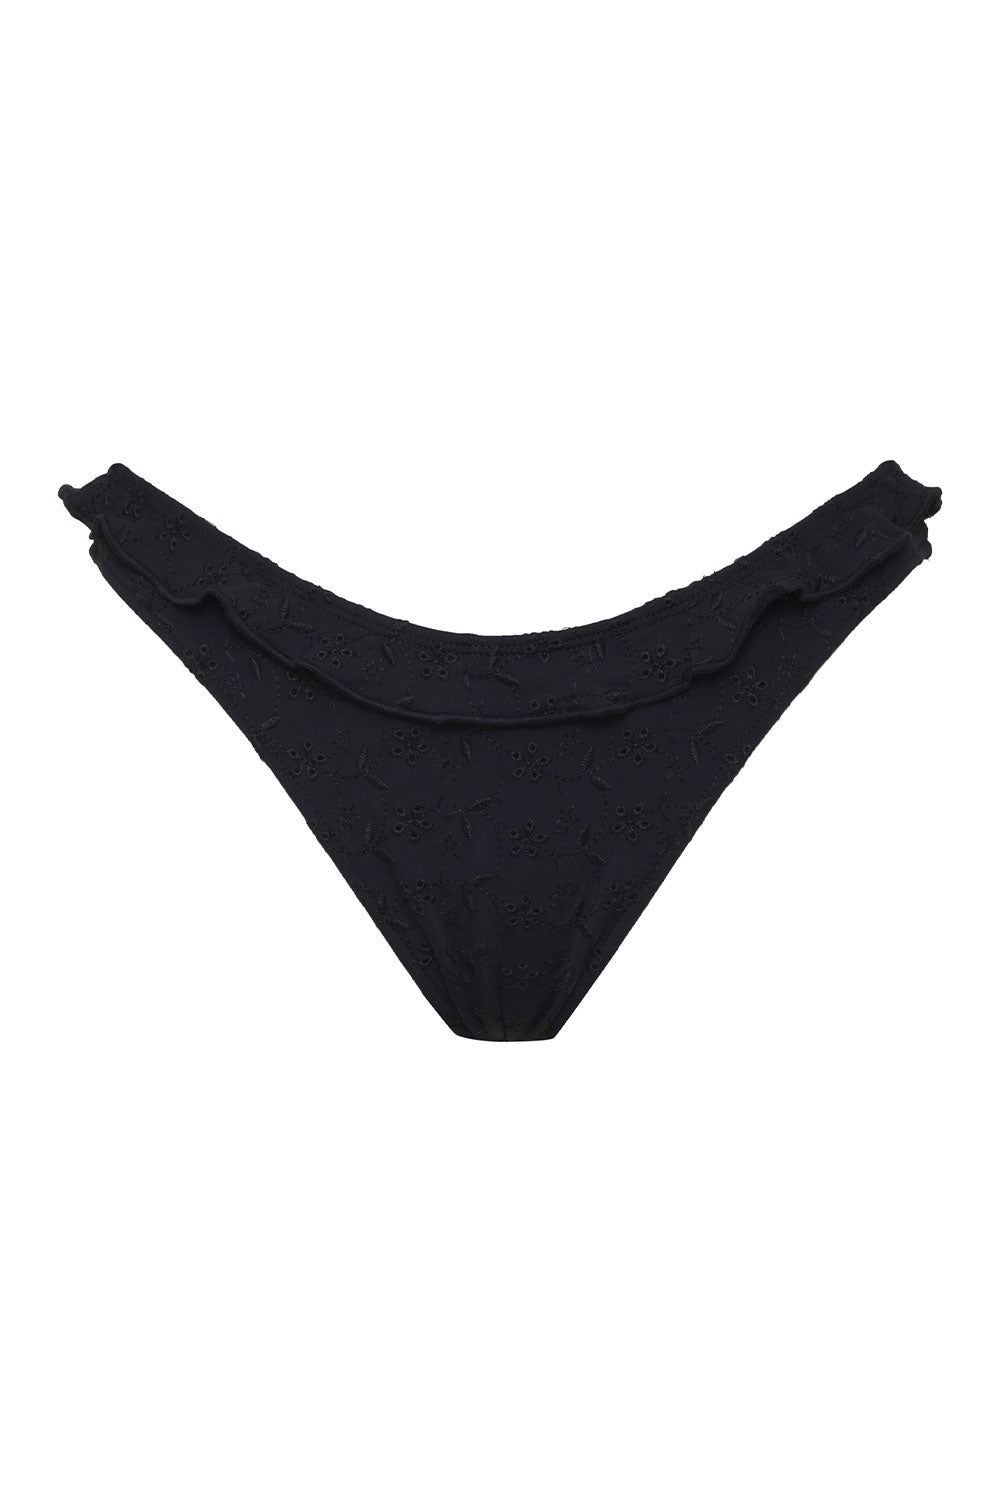 Lucia Eyelet Cheeky Bikini Bottom - Black